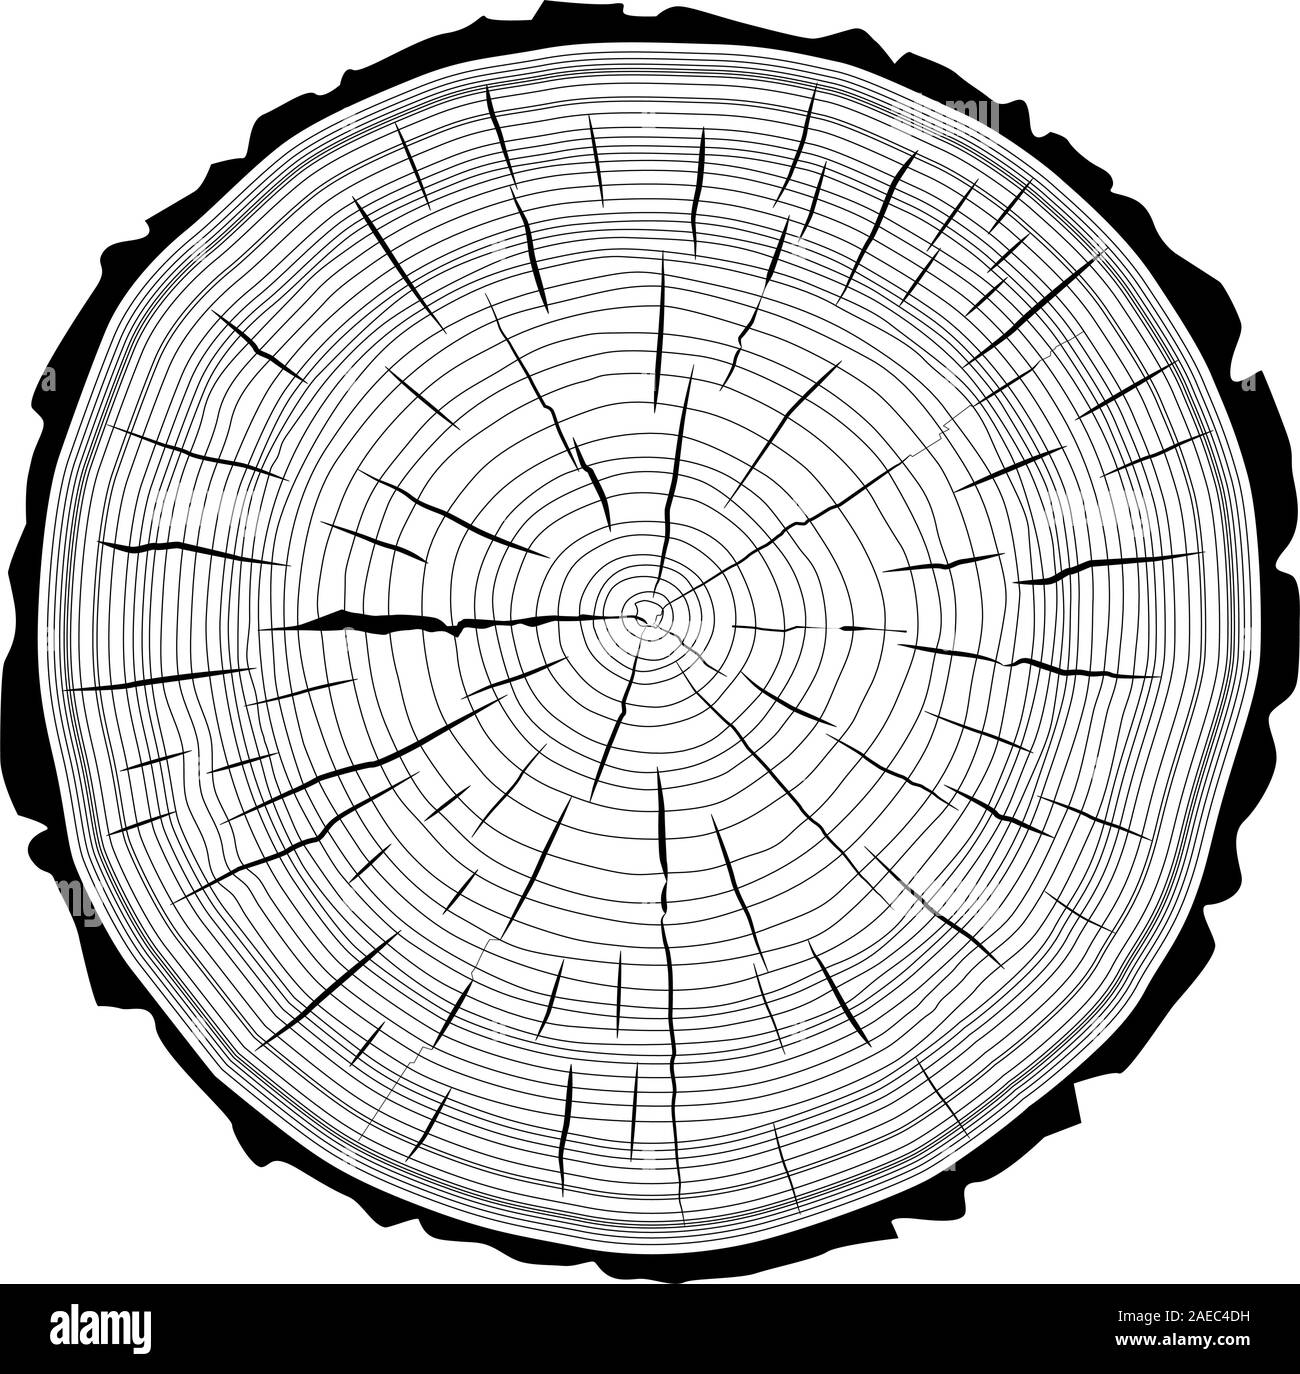 What Tree Rings Can Reveal - Cornellians | Cornell University